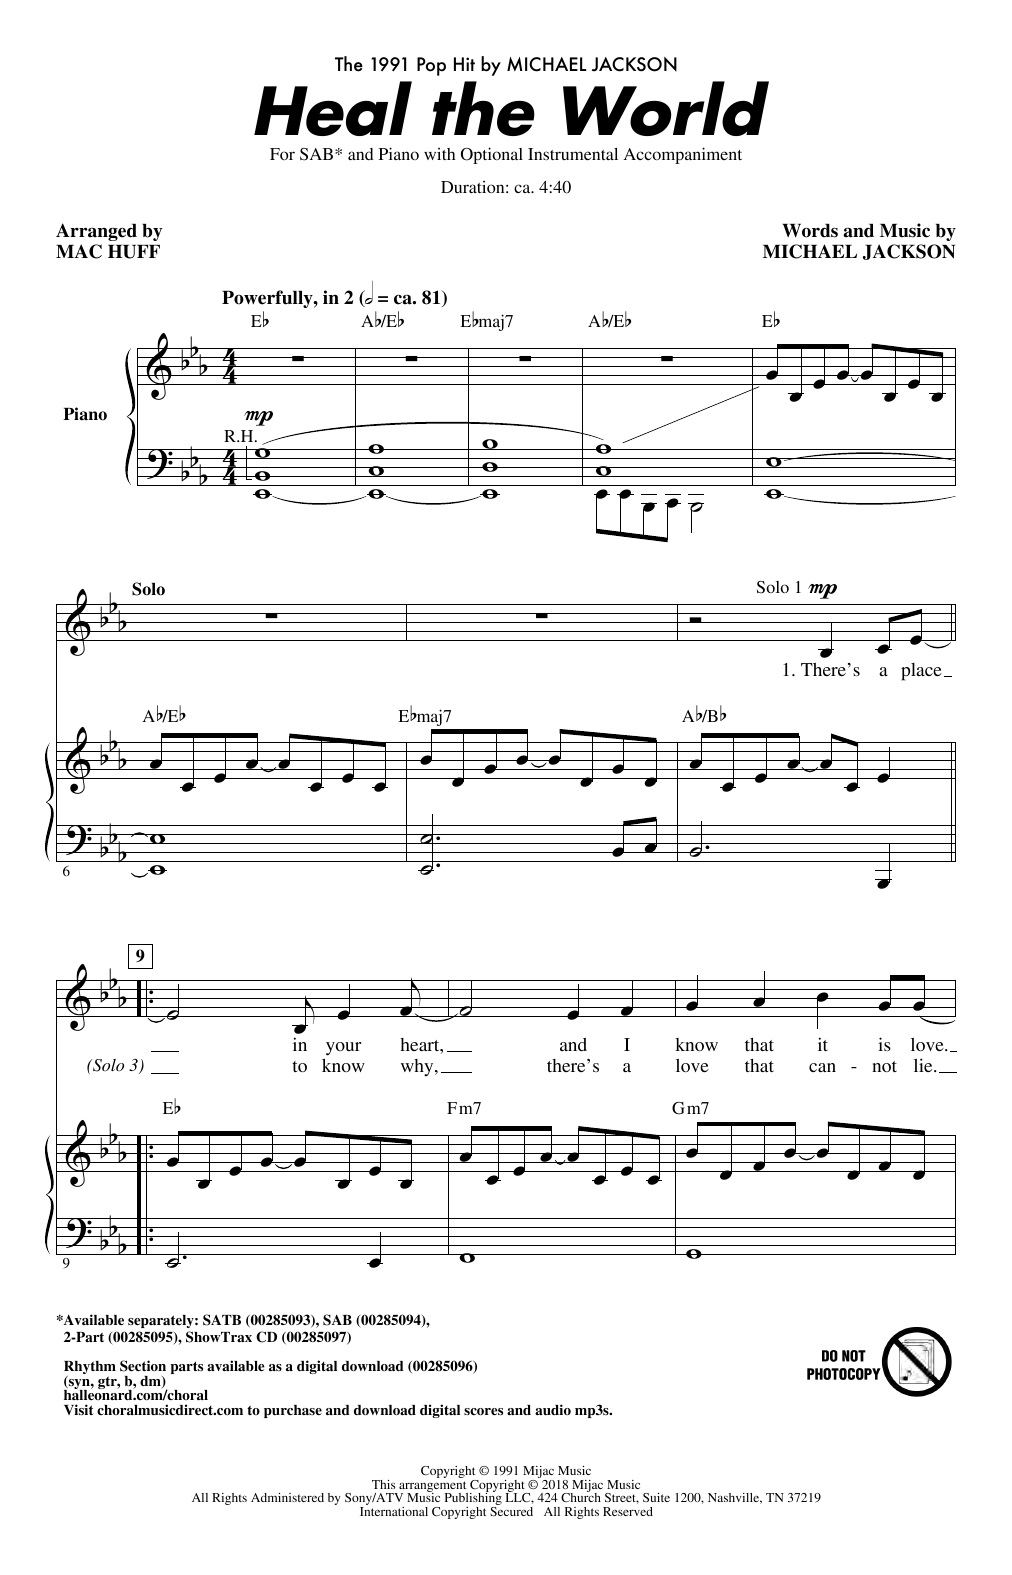 Michael Jackson Heal The World (Arr. Mac Huff) Sheet Music Notes & Chords for SAB Choir - Download or Print PDF